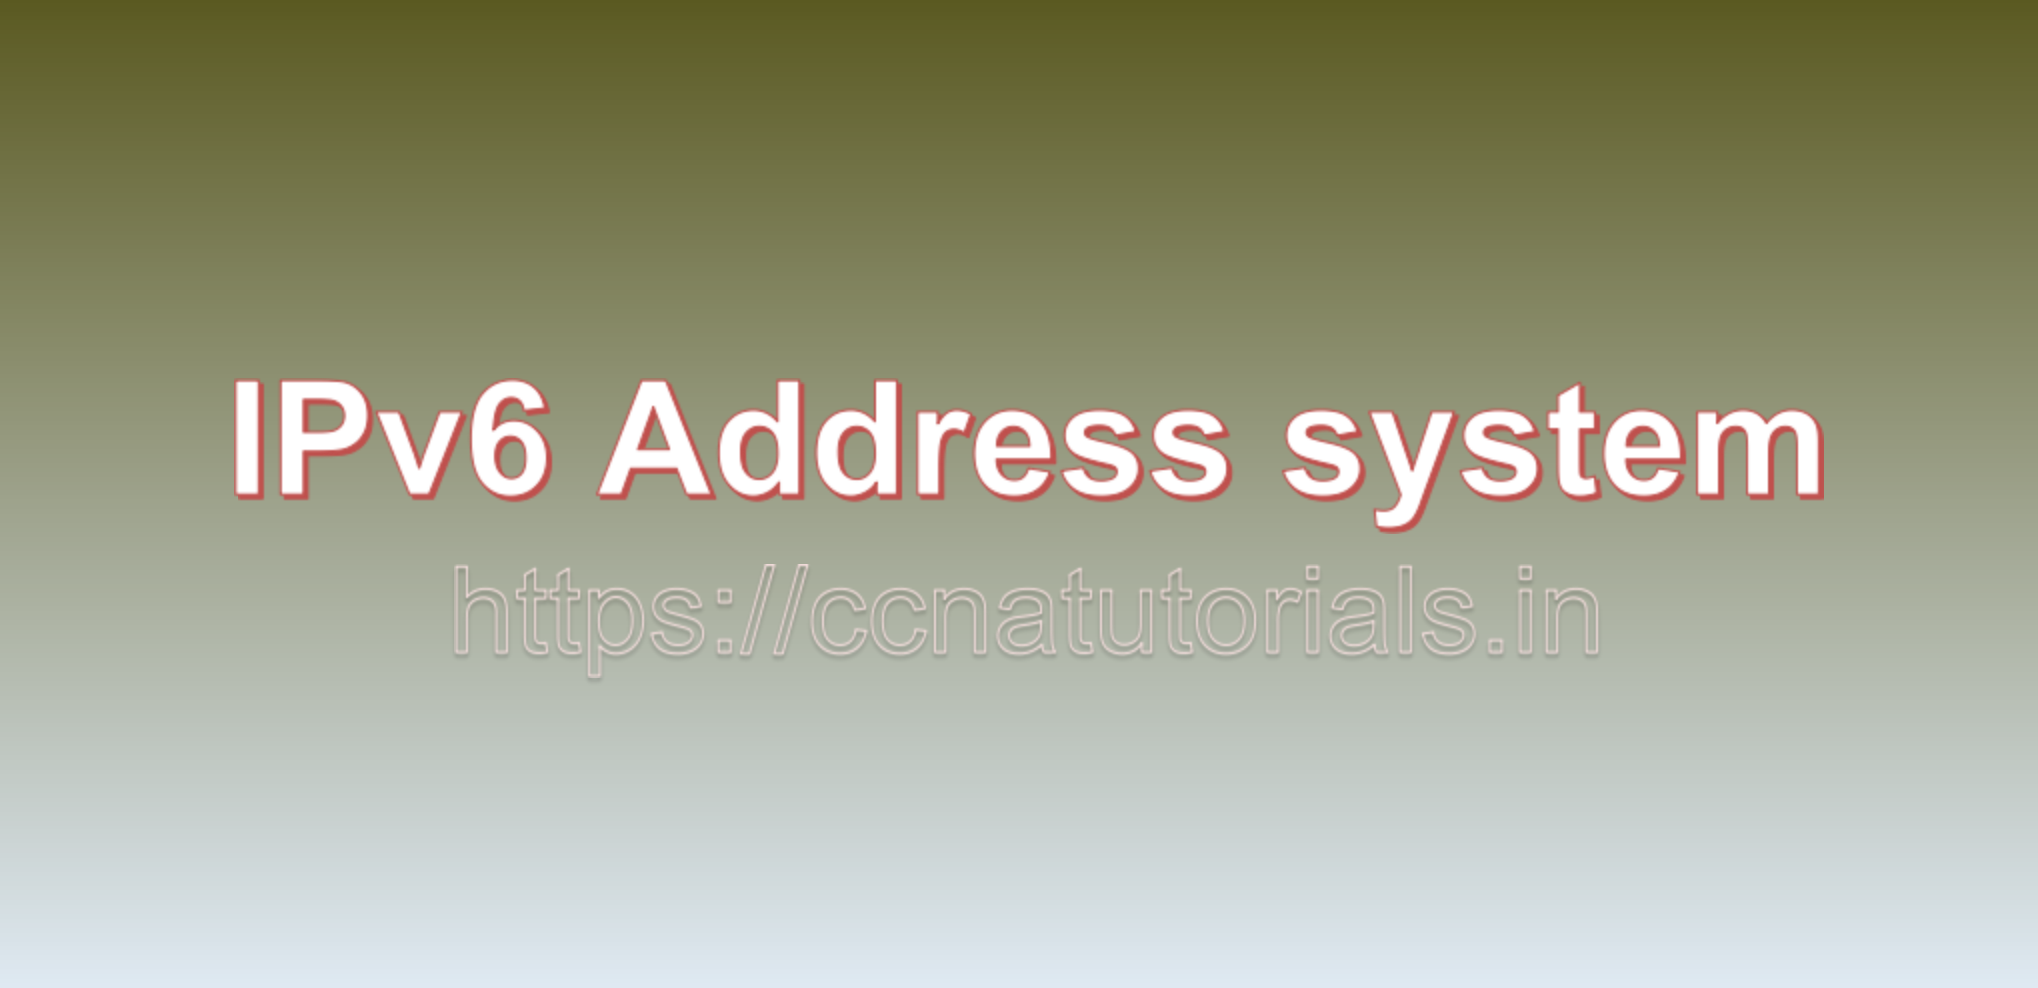 IPv6 Address system, ccna, CCNA TUTORIALS